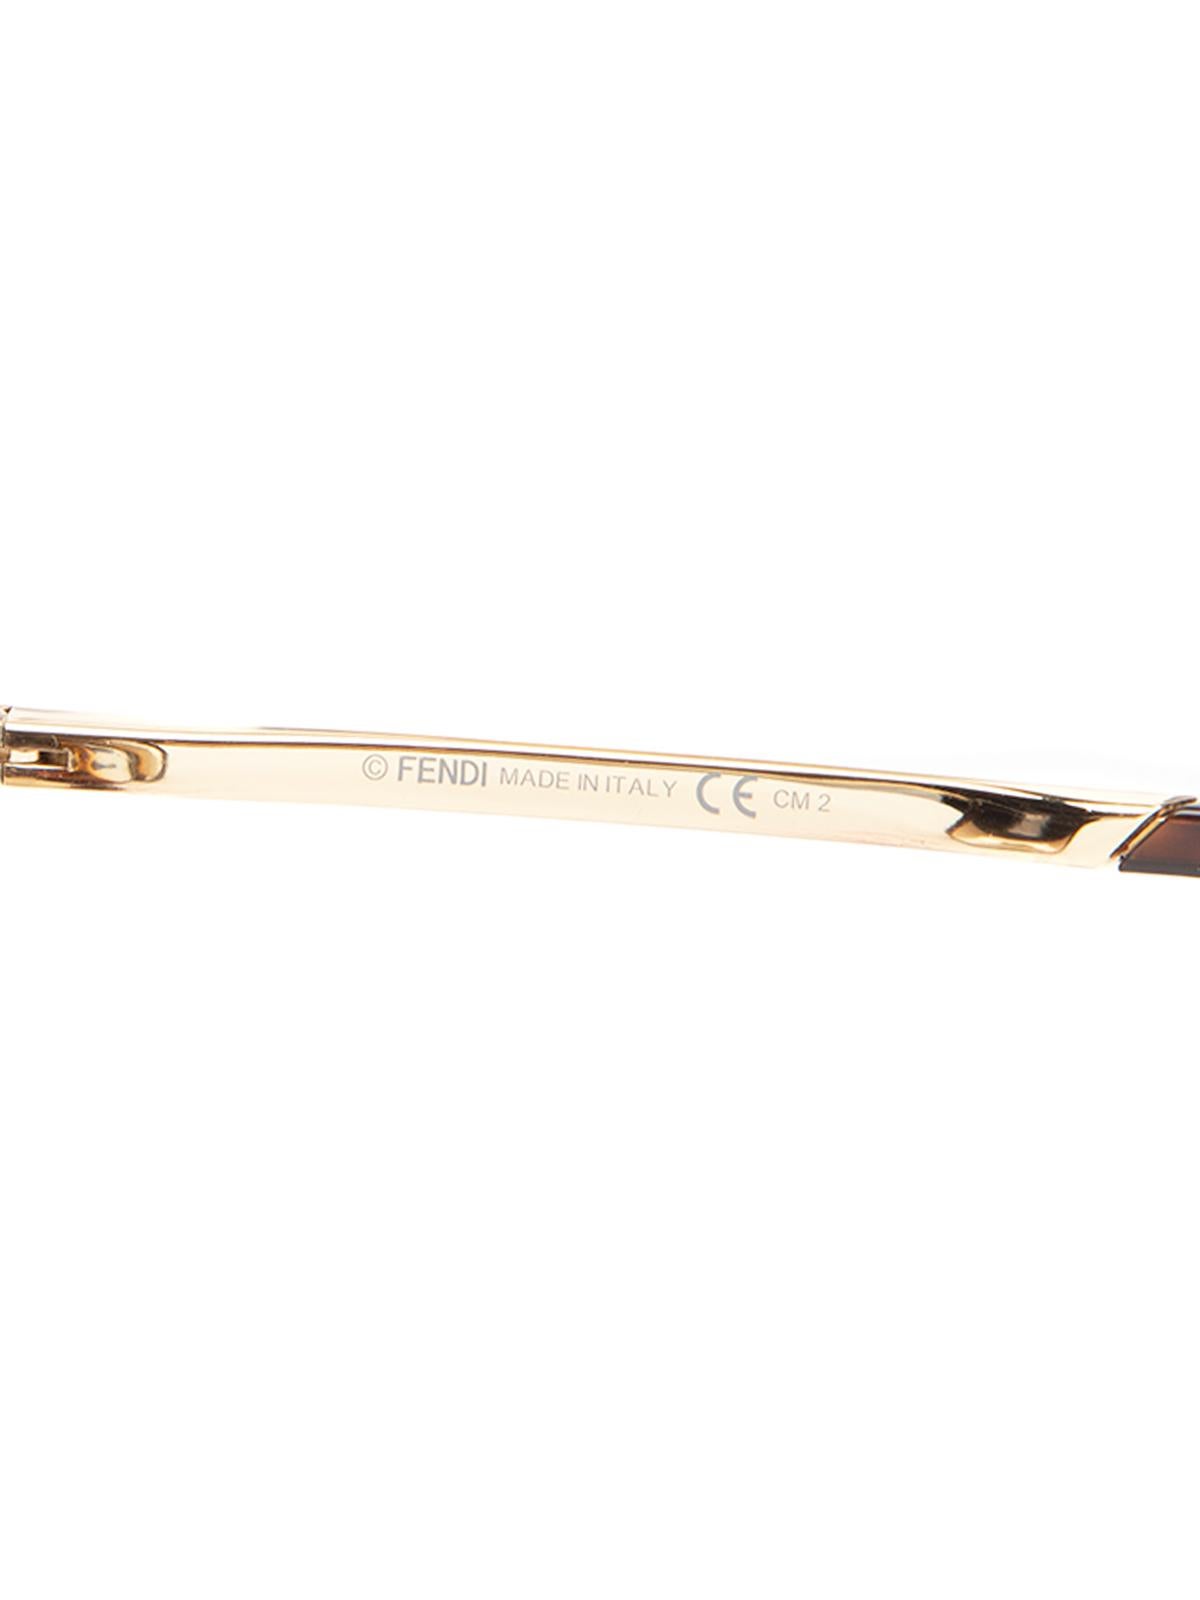 Pre-Loved Fendi Women's Tortoiseshell Brown Sunglasses *FF 0021/F/S 1